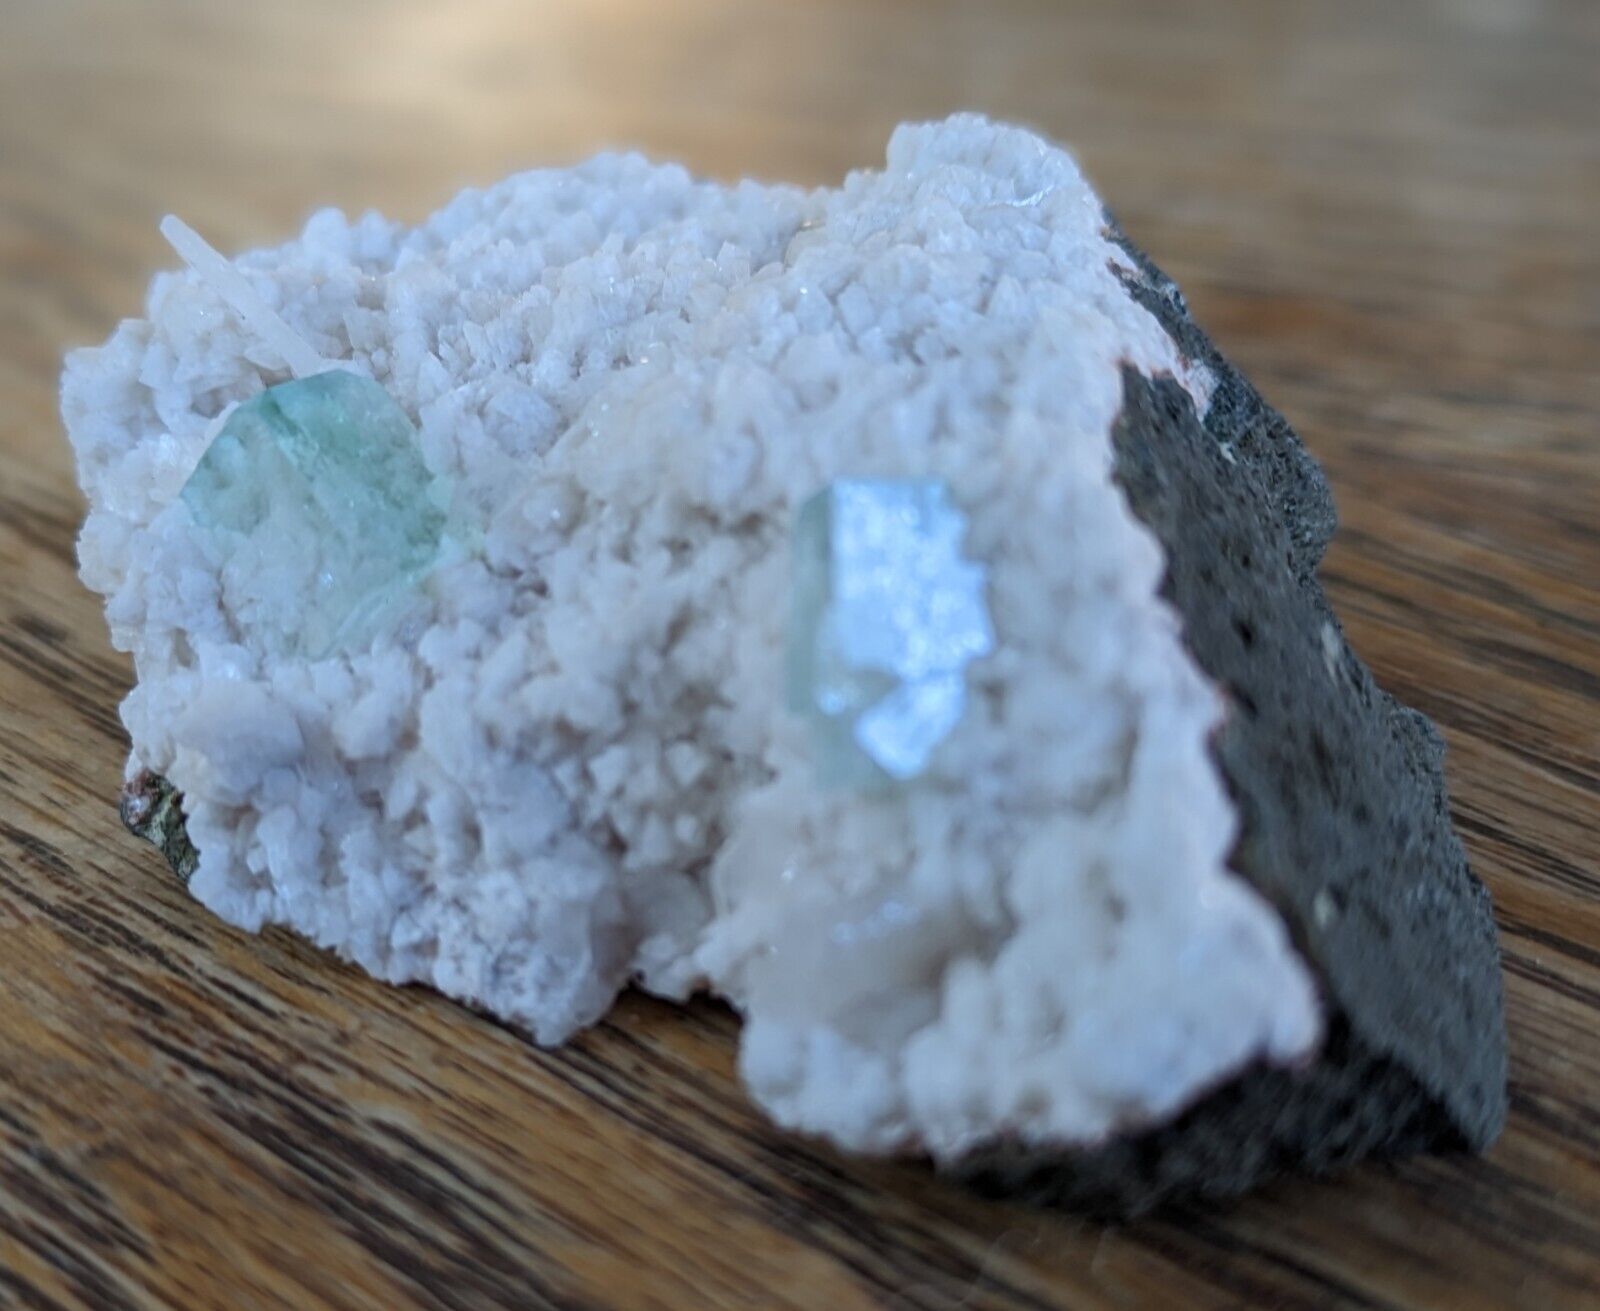 green Apophyllite on Chalcedony Quartz, minerals, crystals, mineral specimens